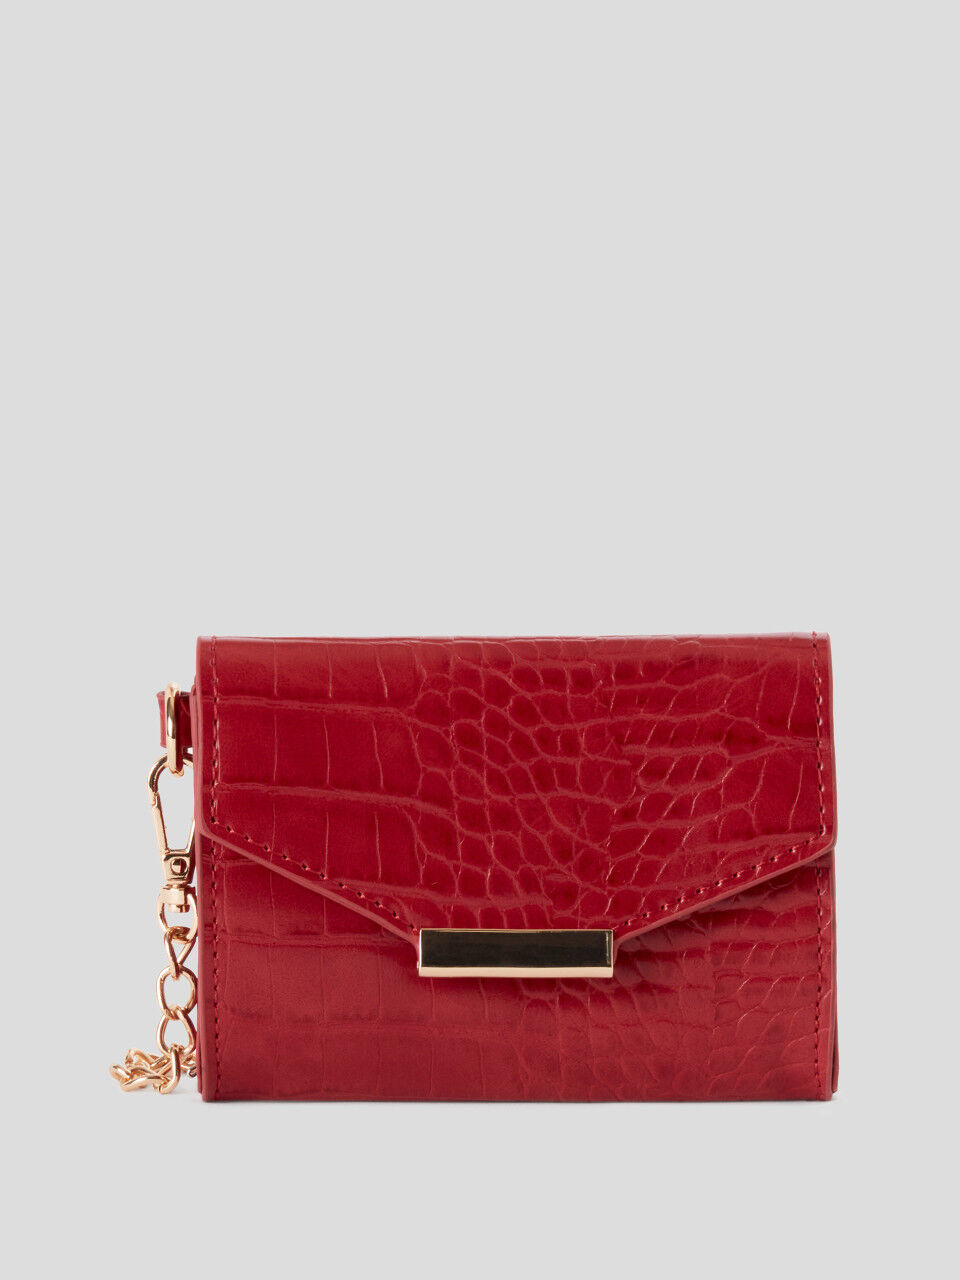 Handbags, Women Hand Bags, लेडीज हैंड बैग - Wing Online Shop, Howrah | ID:  2852168005997